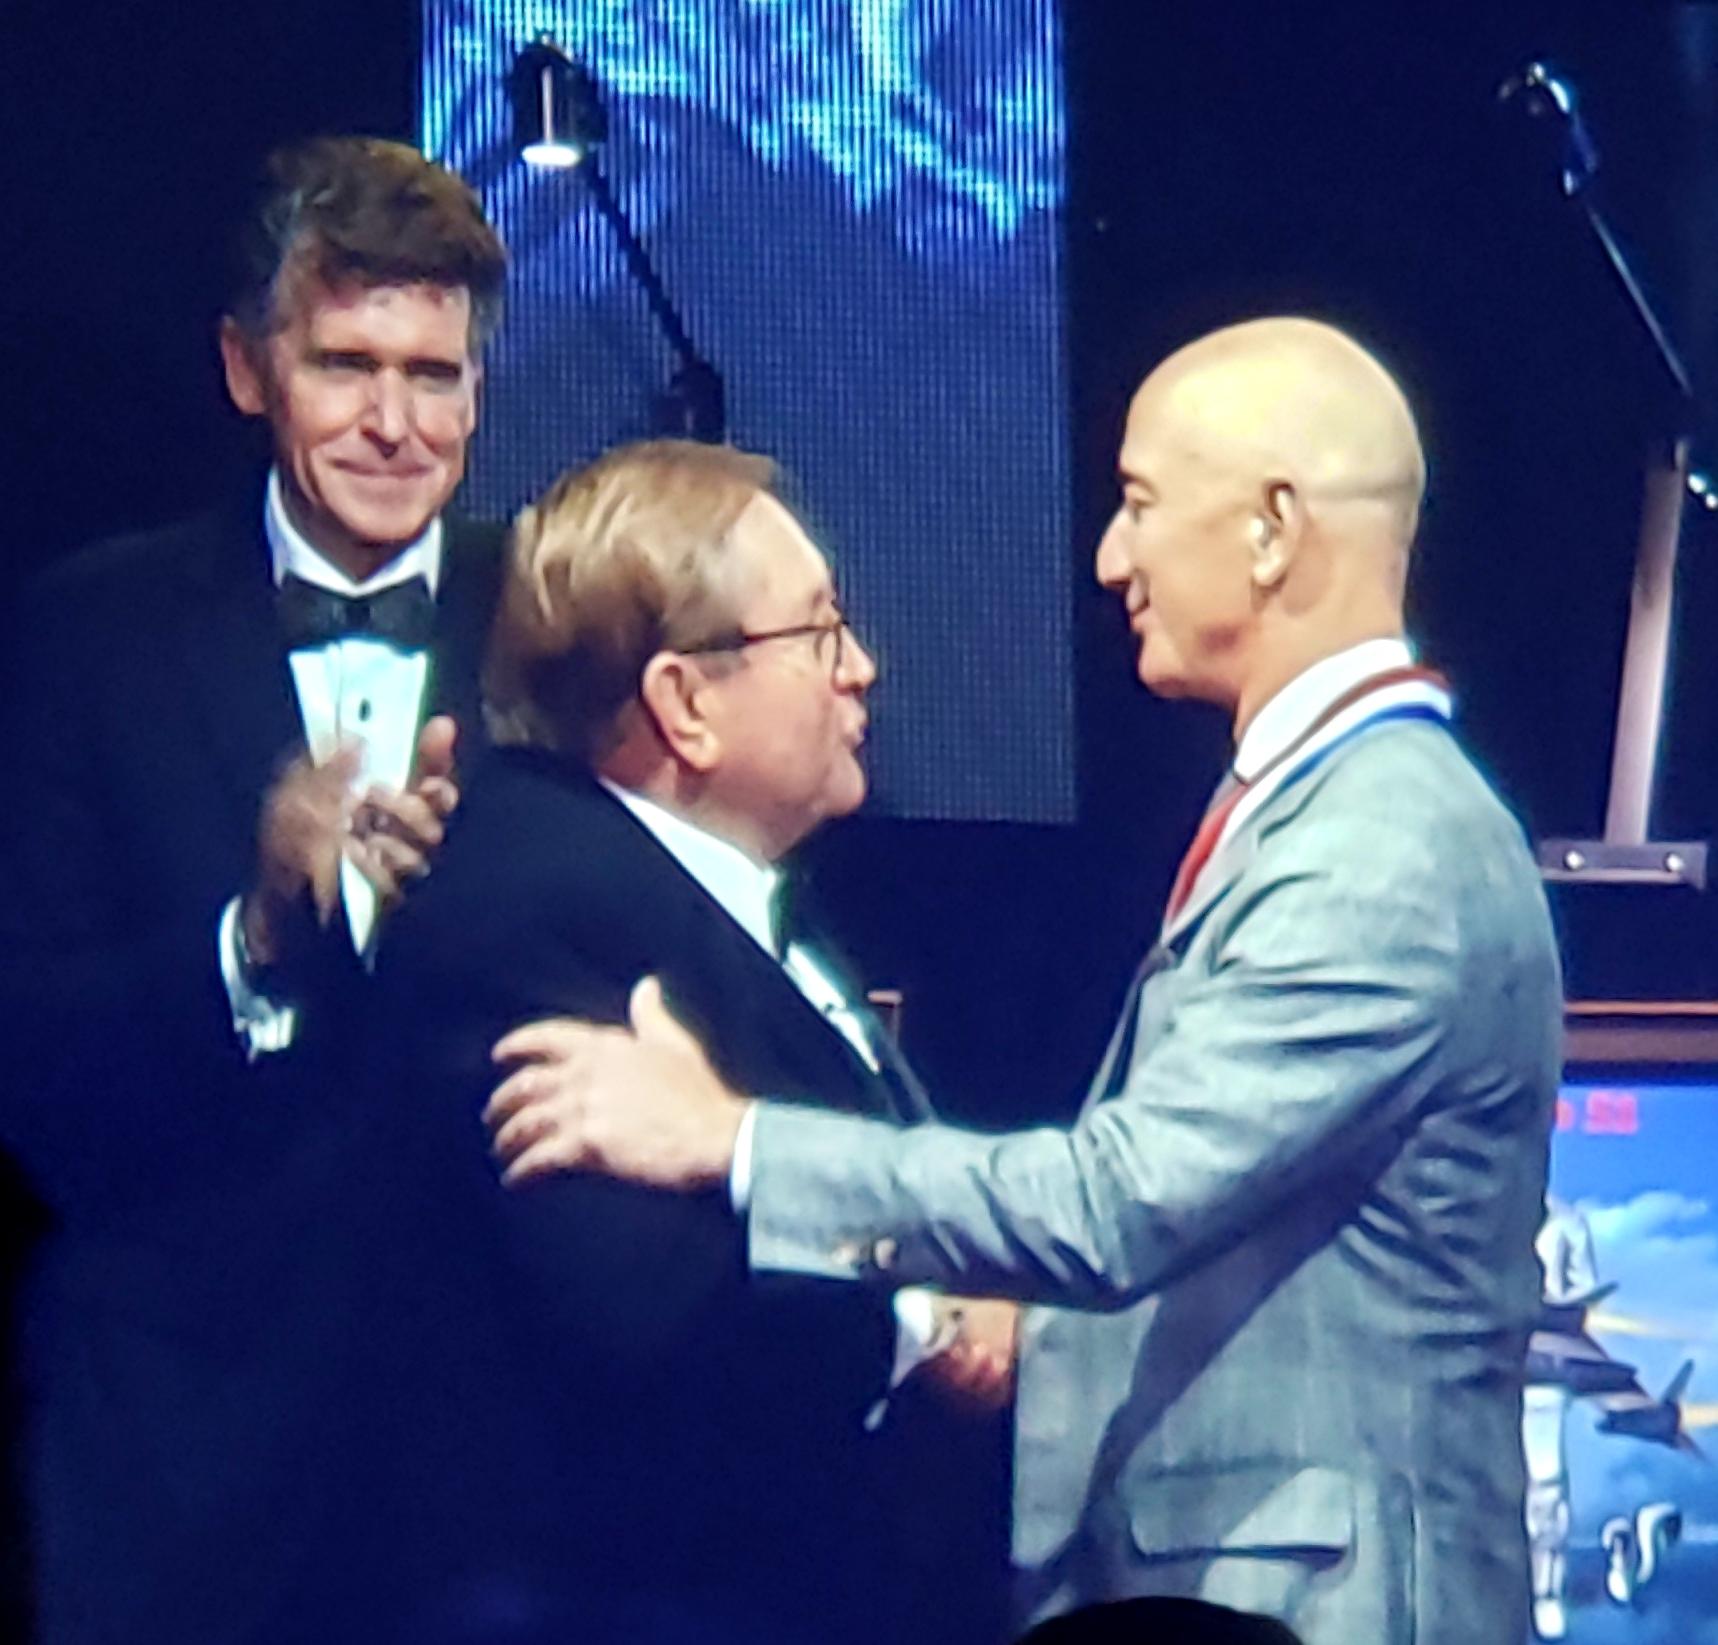 Jeff Bezos Presented Legend of Flight Award